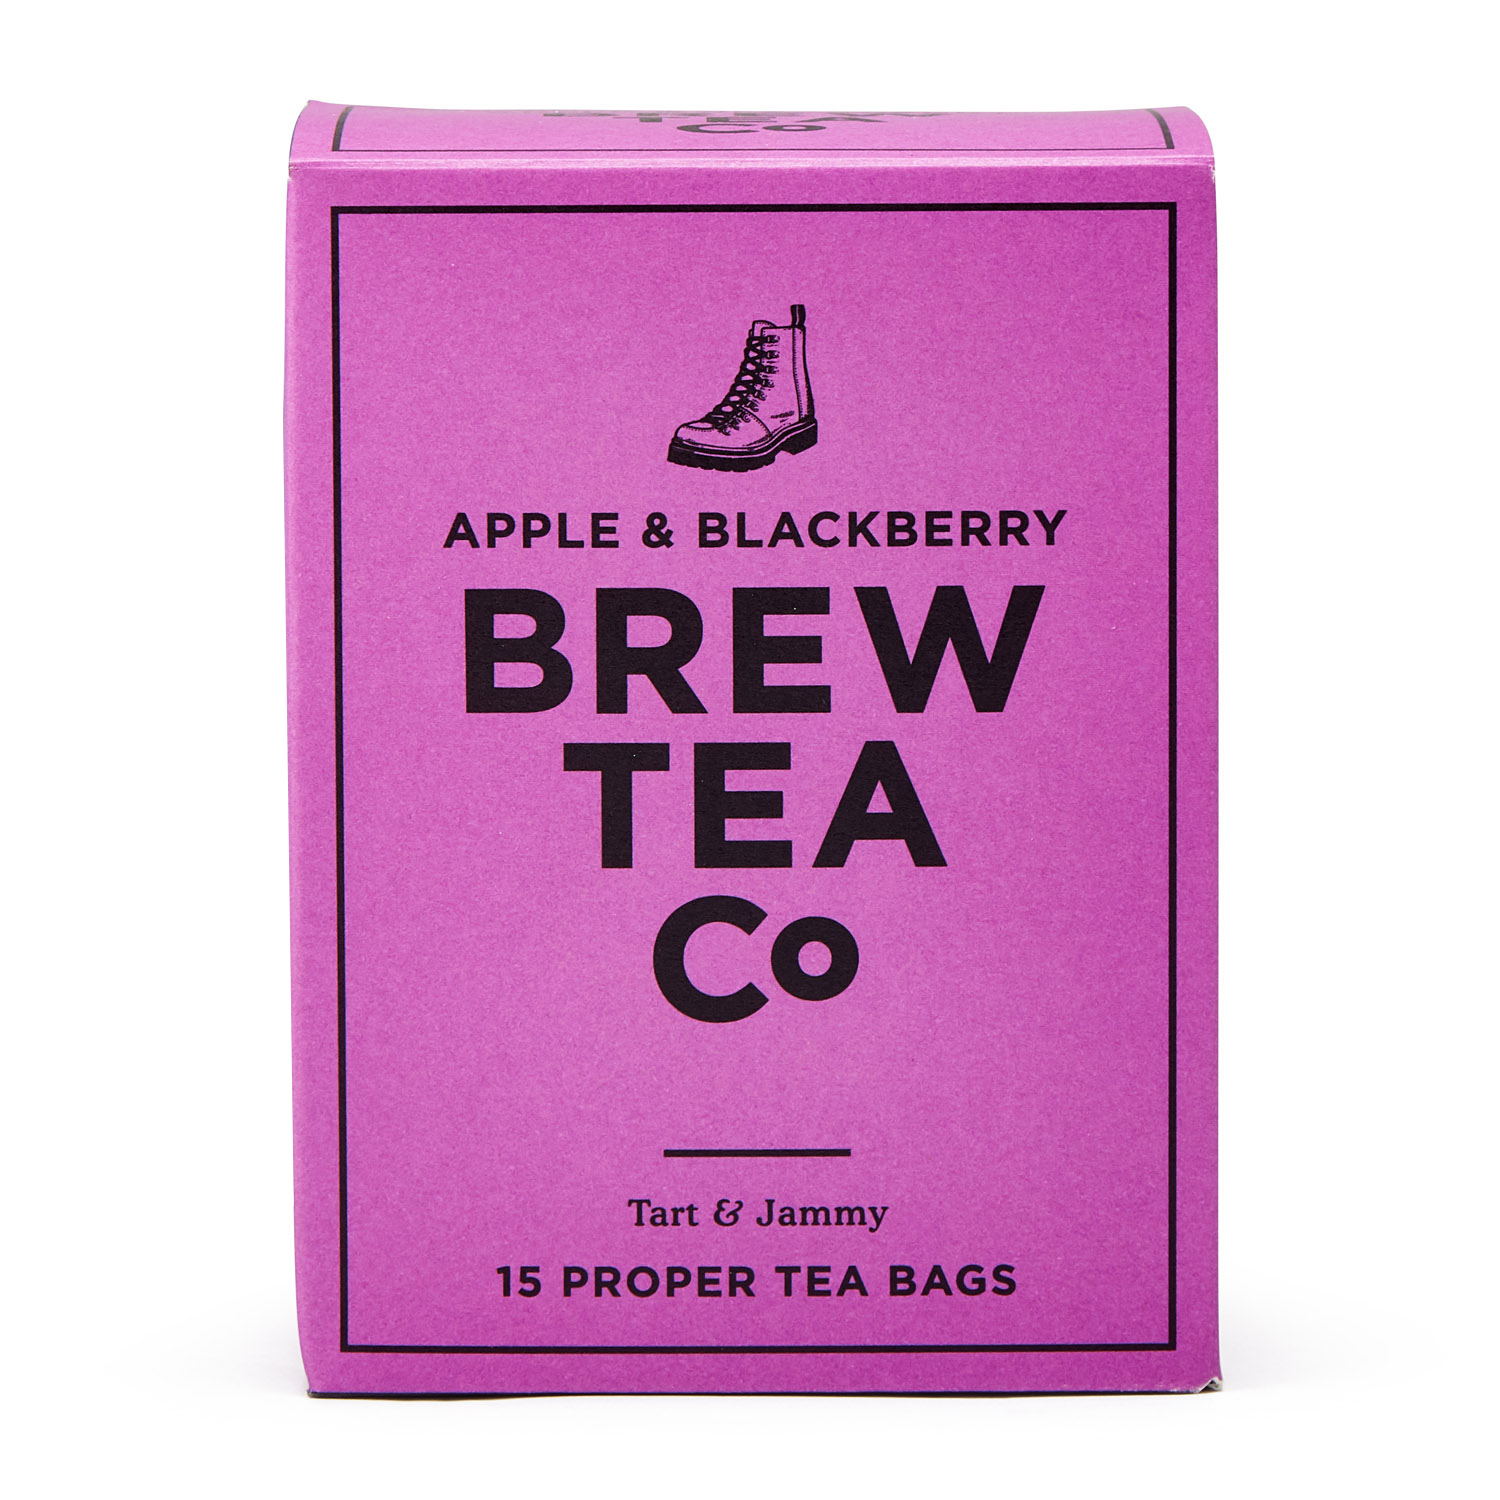 Brew Tea - Apple & Blackberry Tea bags